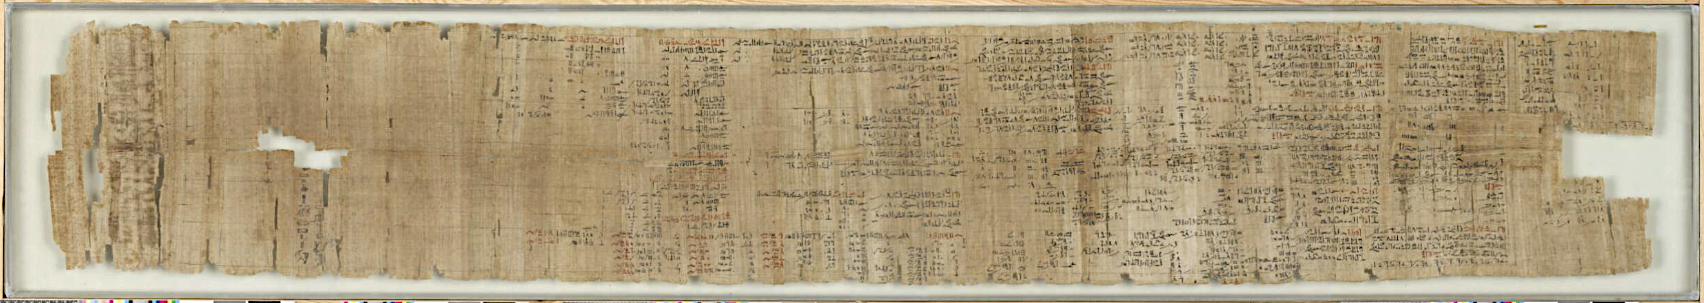 Ahmes/Rhind mathematical papyrus. Middle Kingdom around 2000 BC.